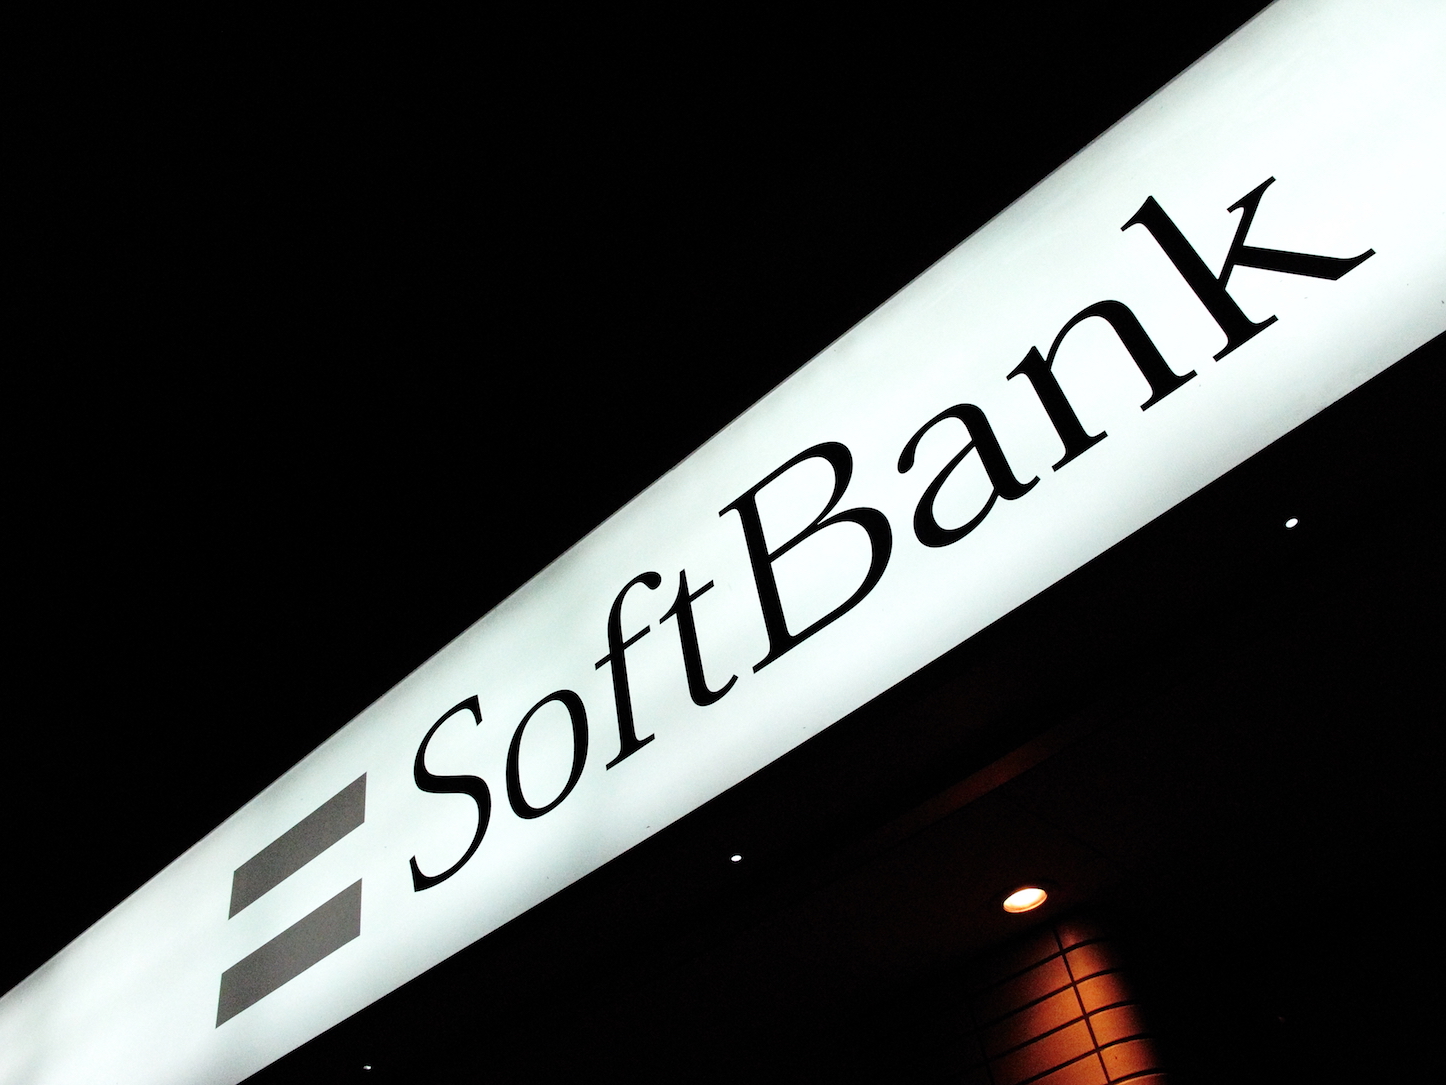 SoftBank-Logo